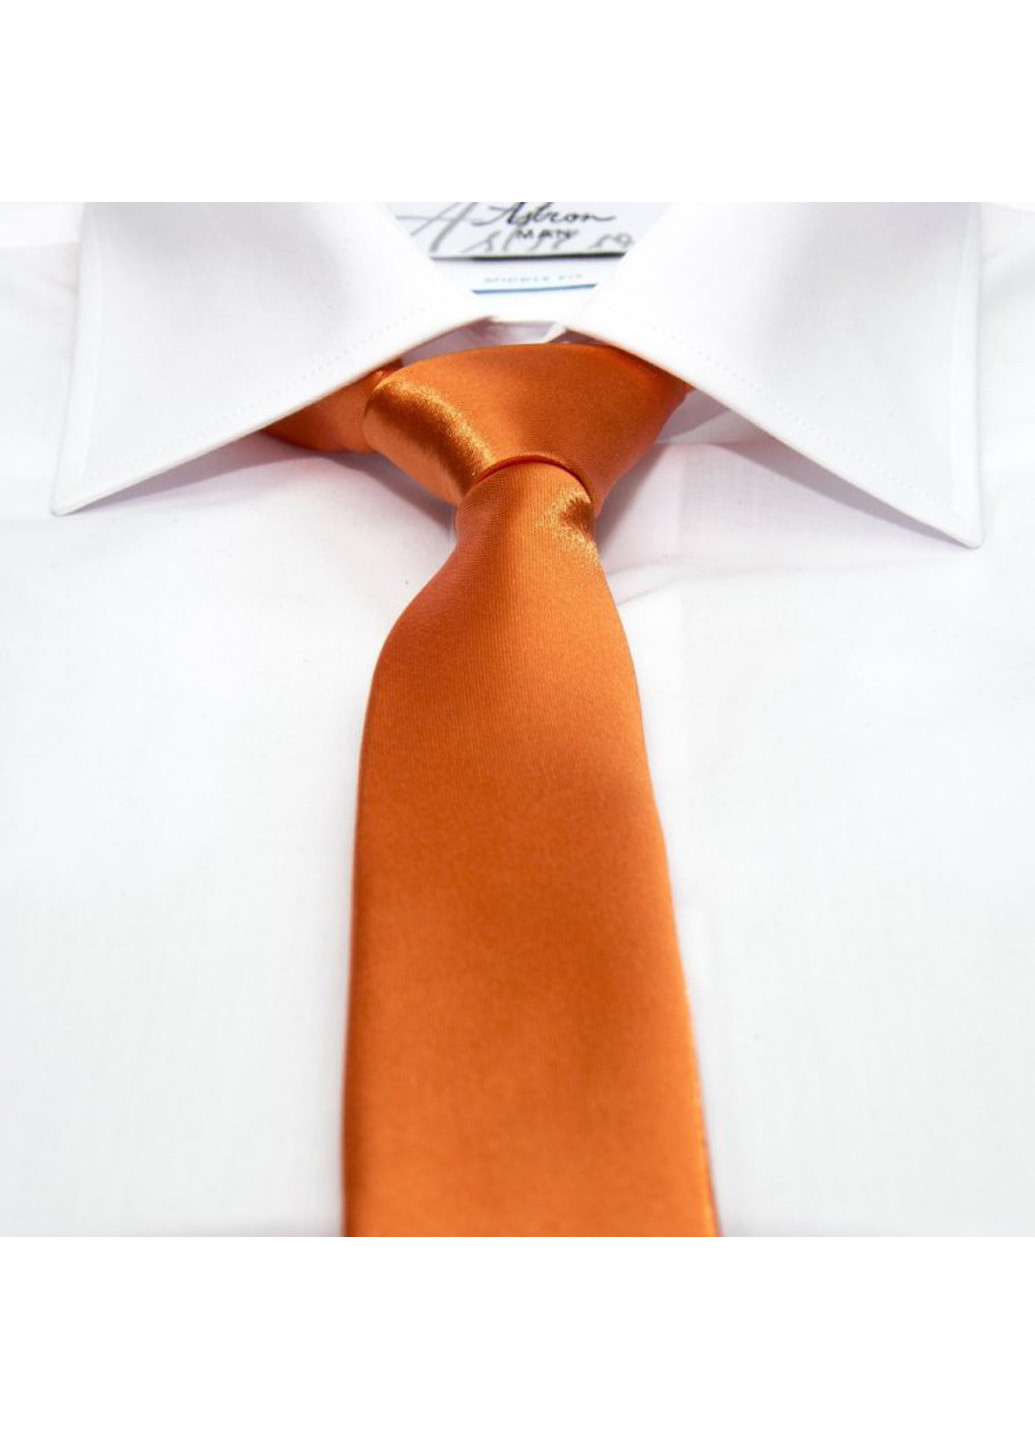 Мужской галстук 5 см Handmade (191128046)